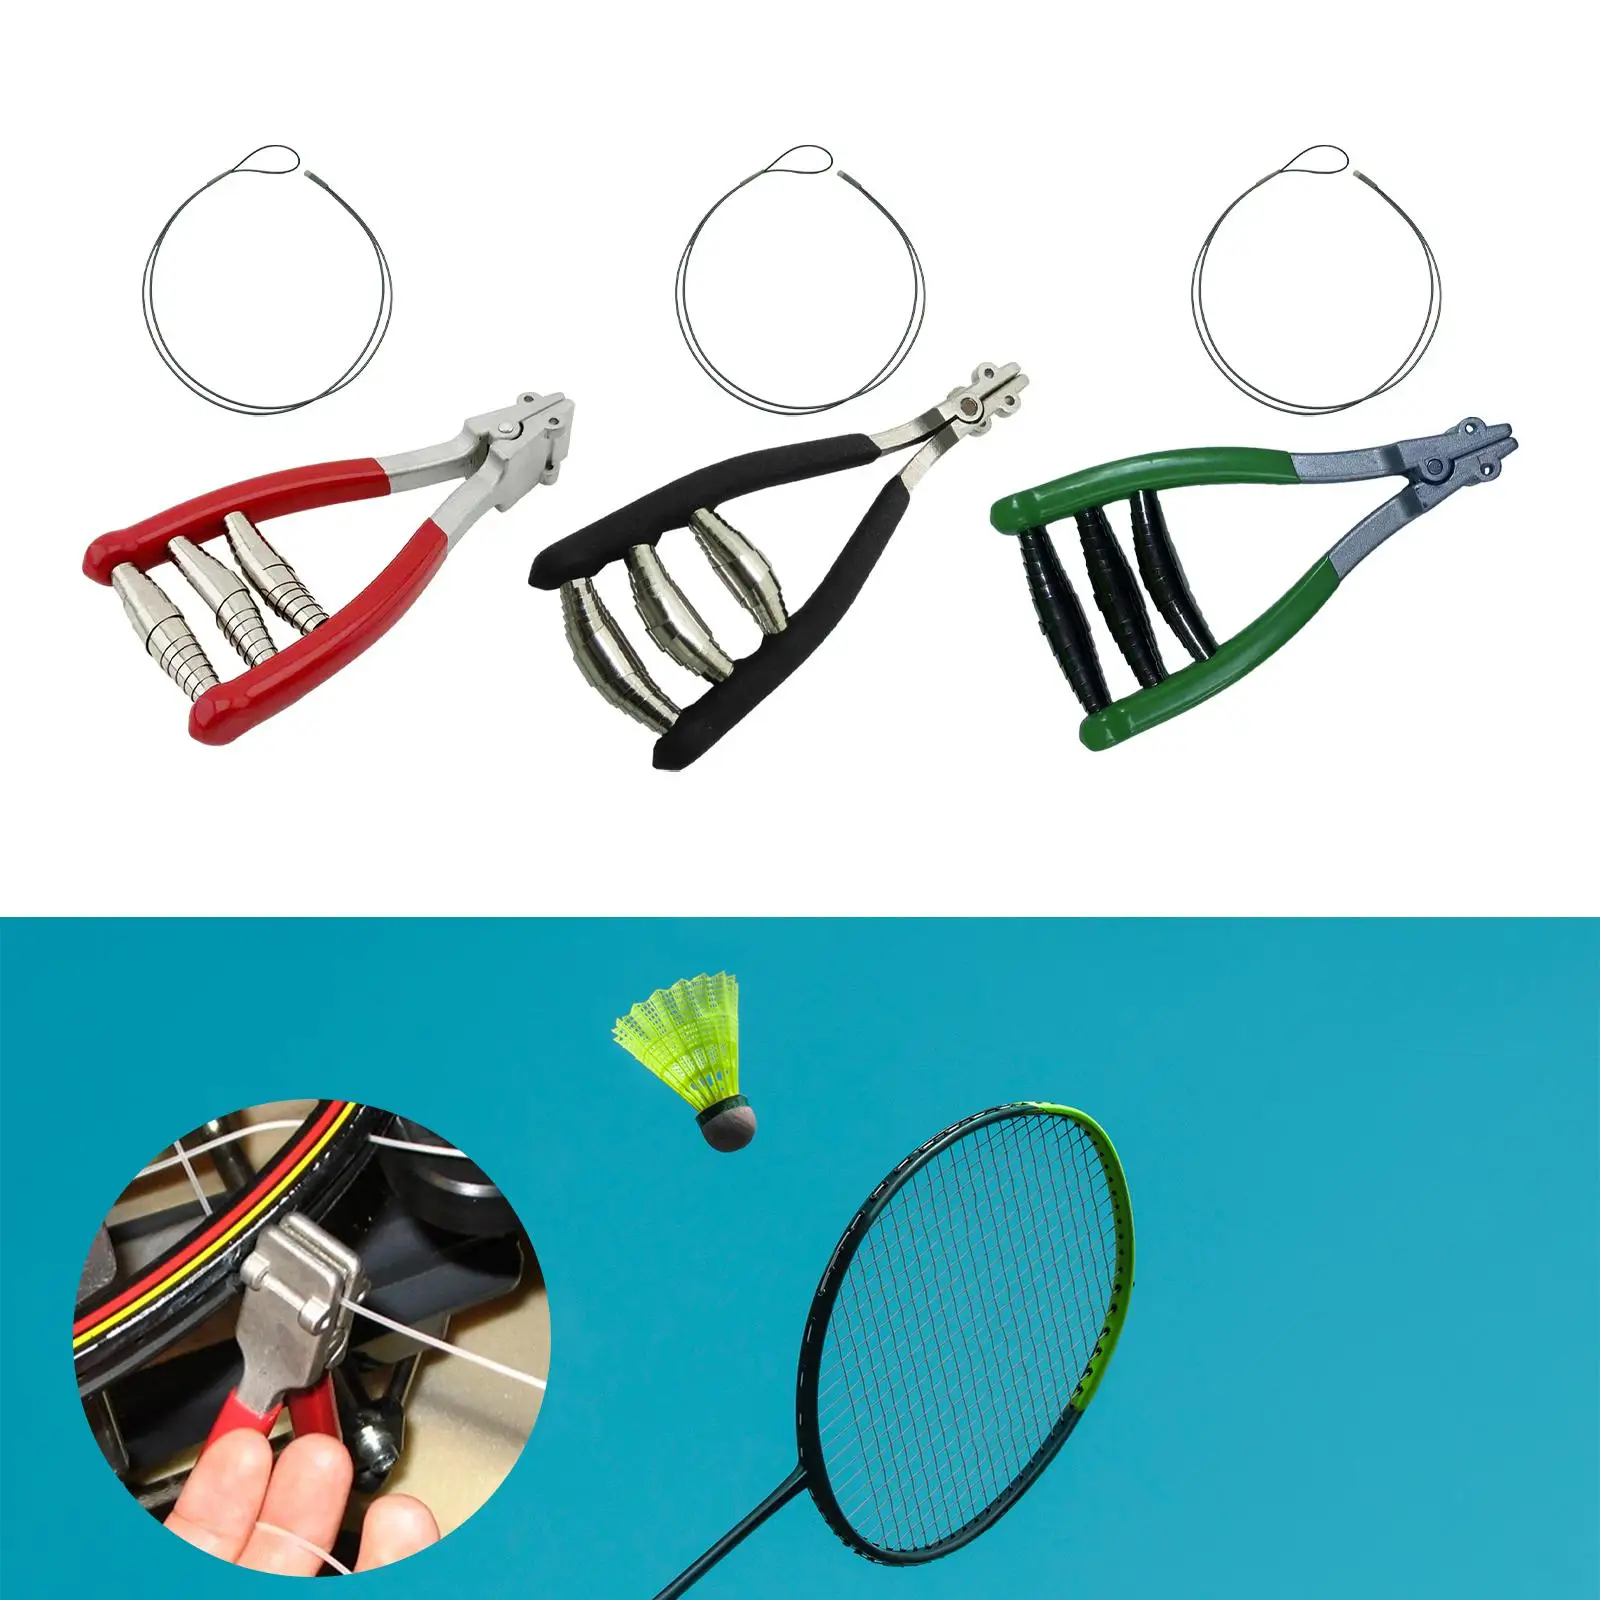 Sports Starting Clamp Badminton Stringing Clamp 3 Spring Alloy Manual Tennis Equipment for Tennis Racquet Badminton Racket